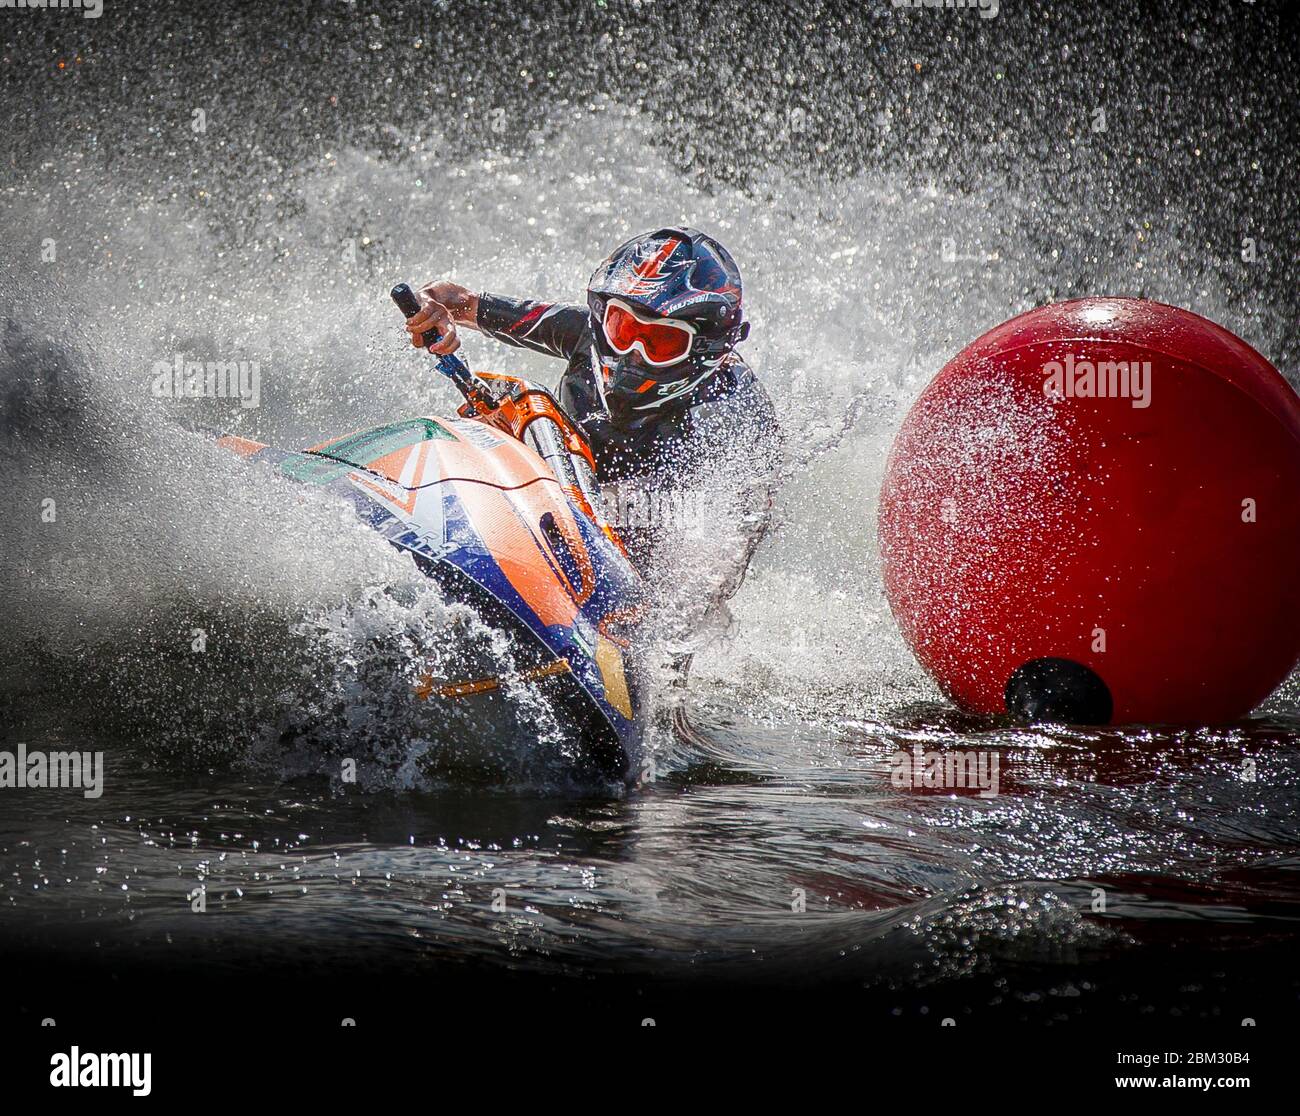 Jetski racing action shot, cornering around buoy amid dramatic water spray Stock Photo